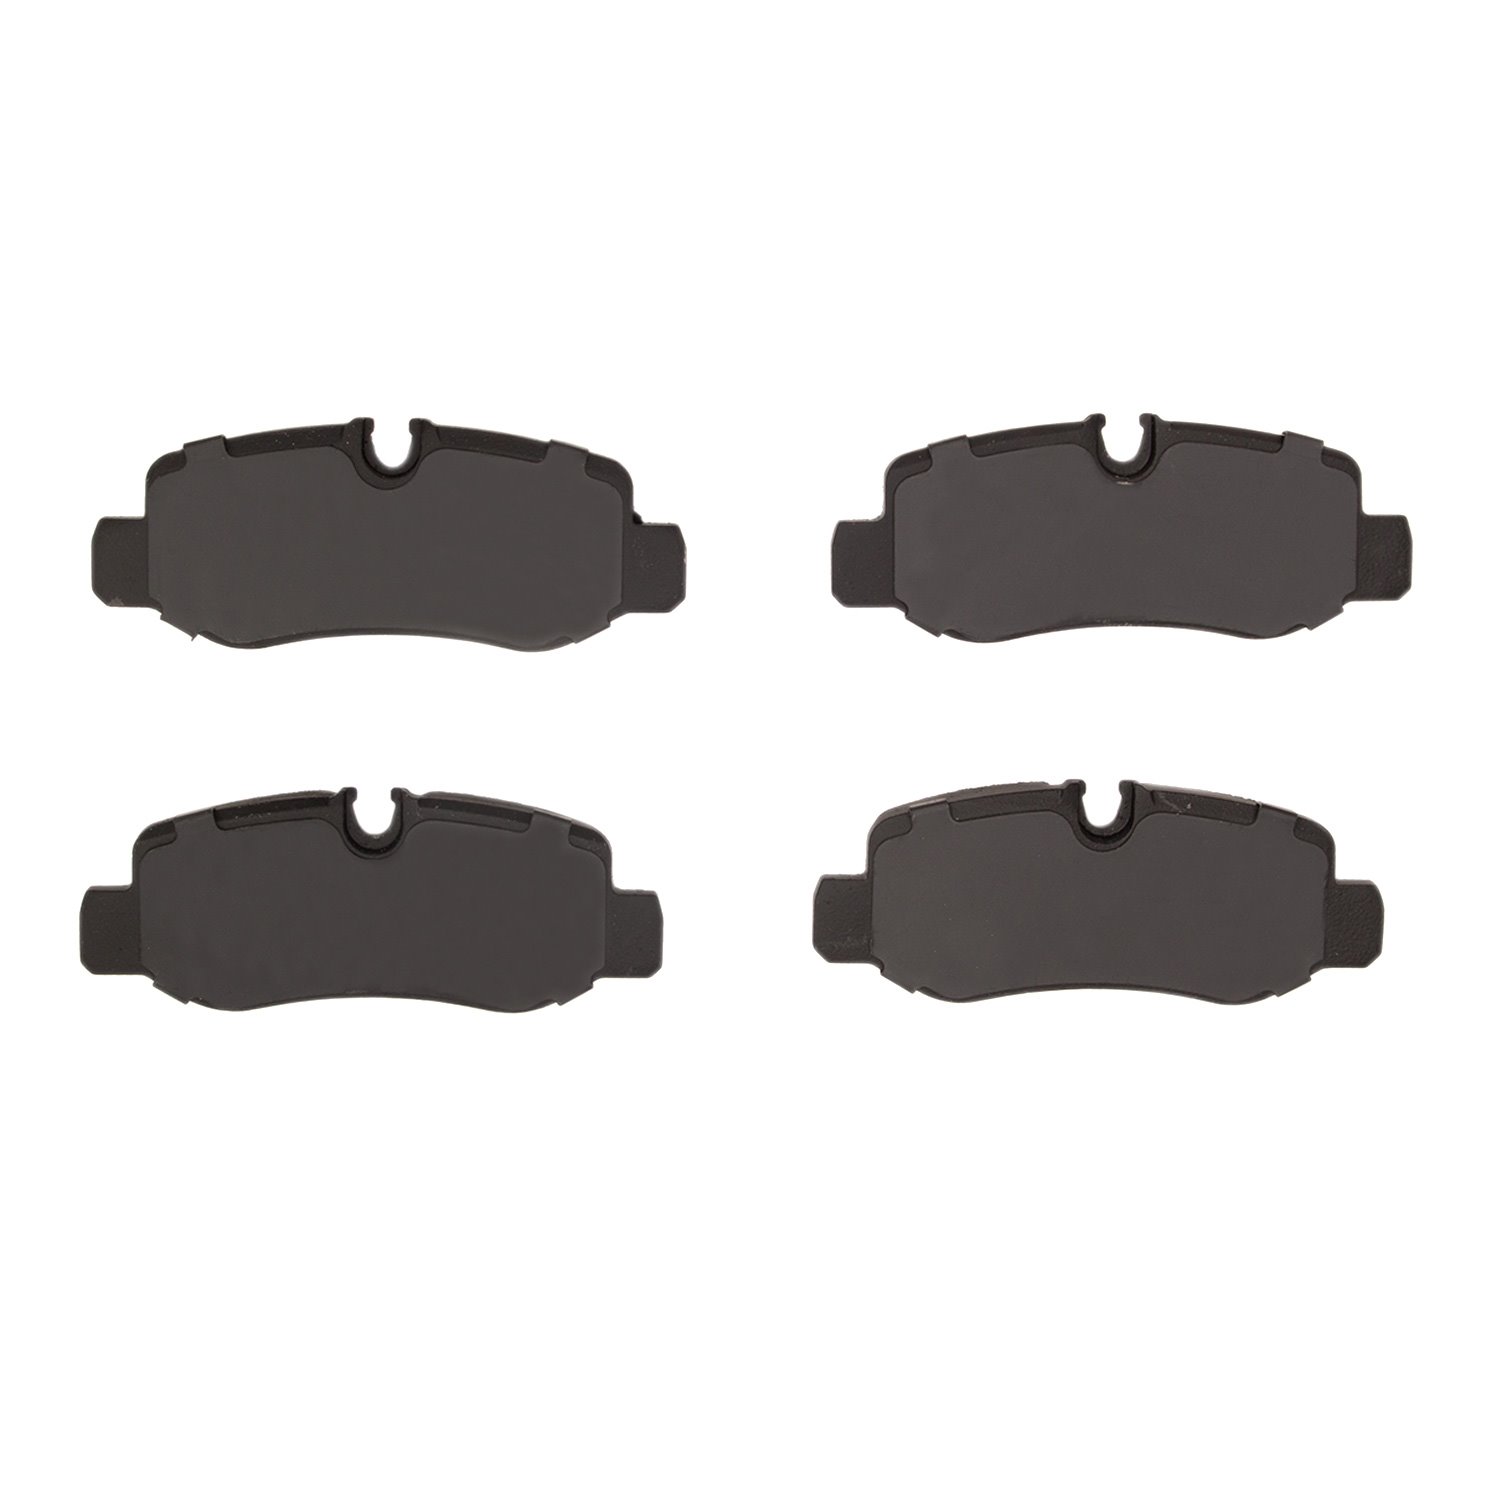 1551-1893-00 5000 Advanced Low-Metallic Brake Pads, Fits Select Mercedes-Benz, Position: Rear